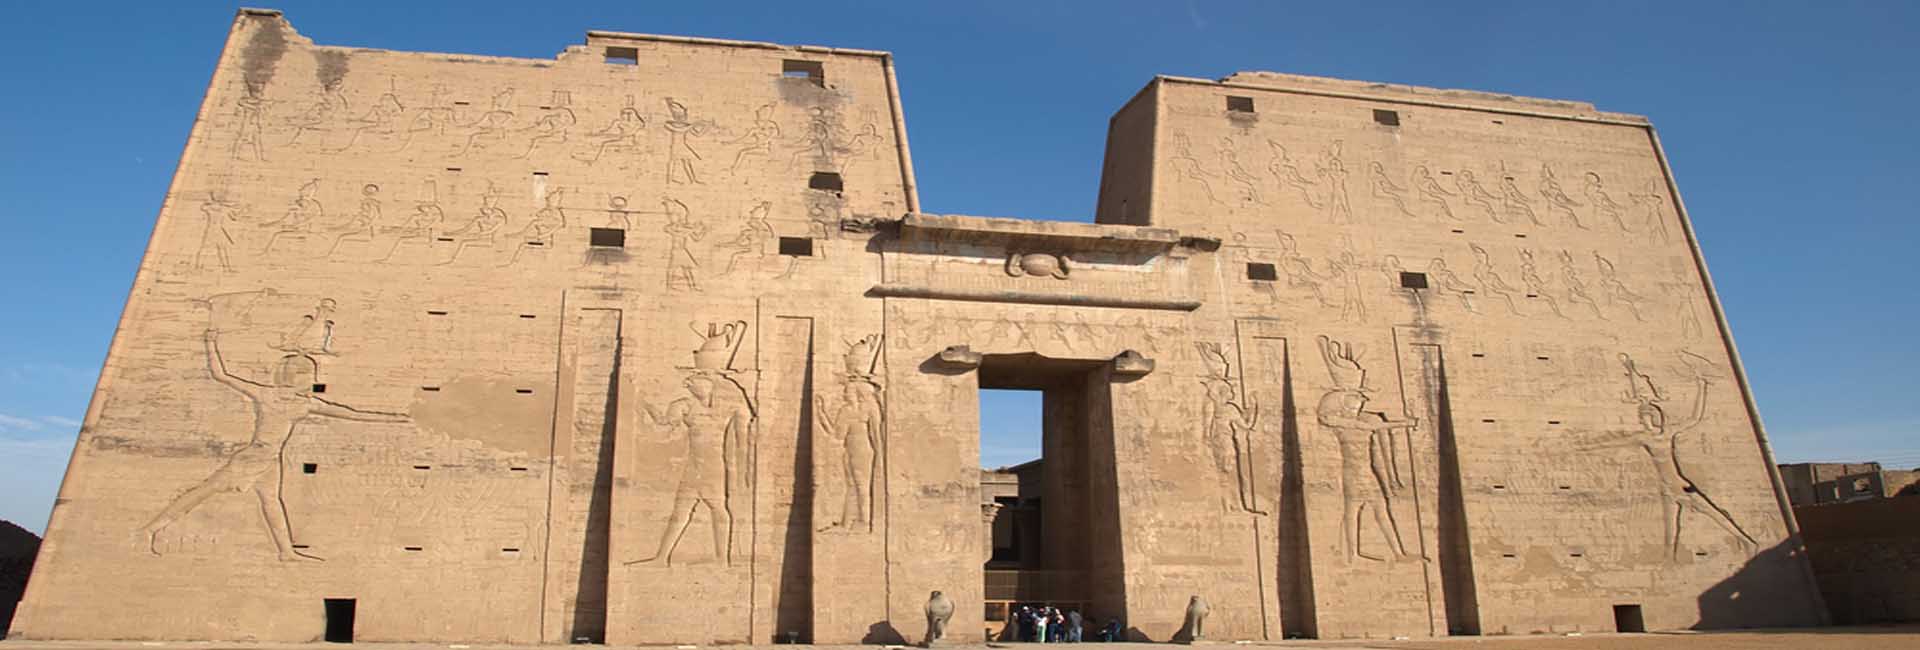 The Temple Of Horus At Edfu